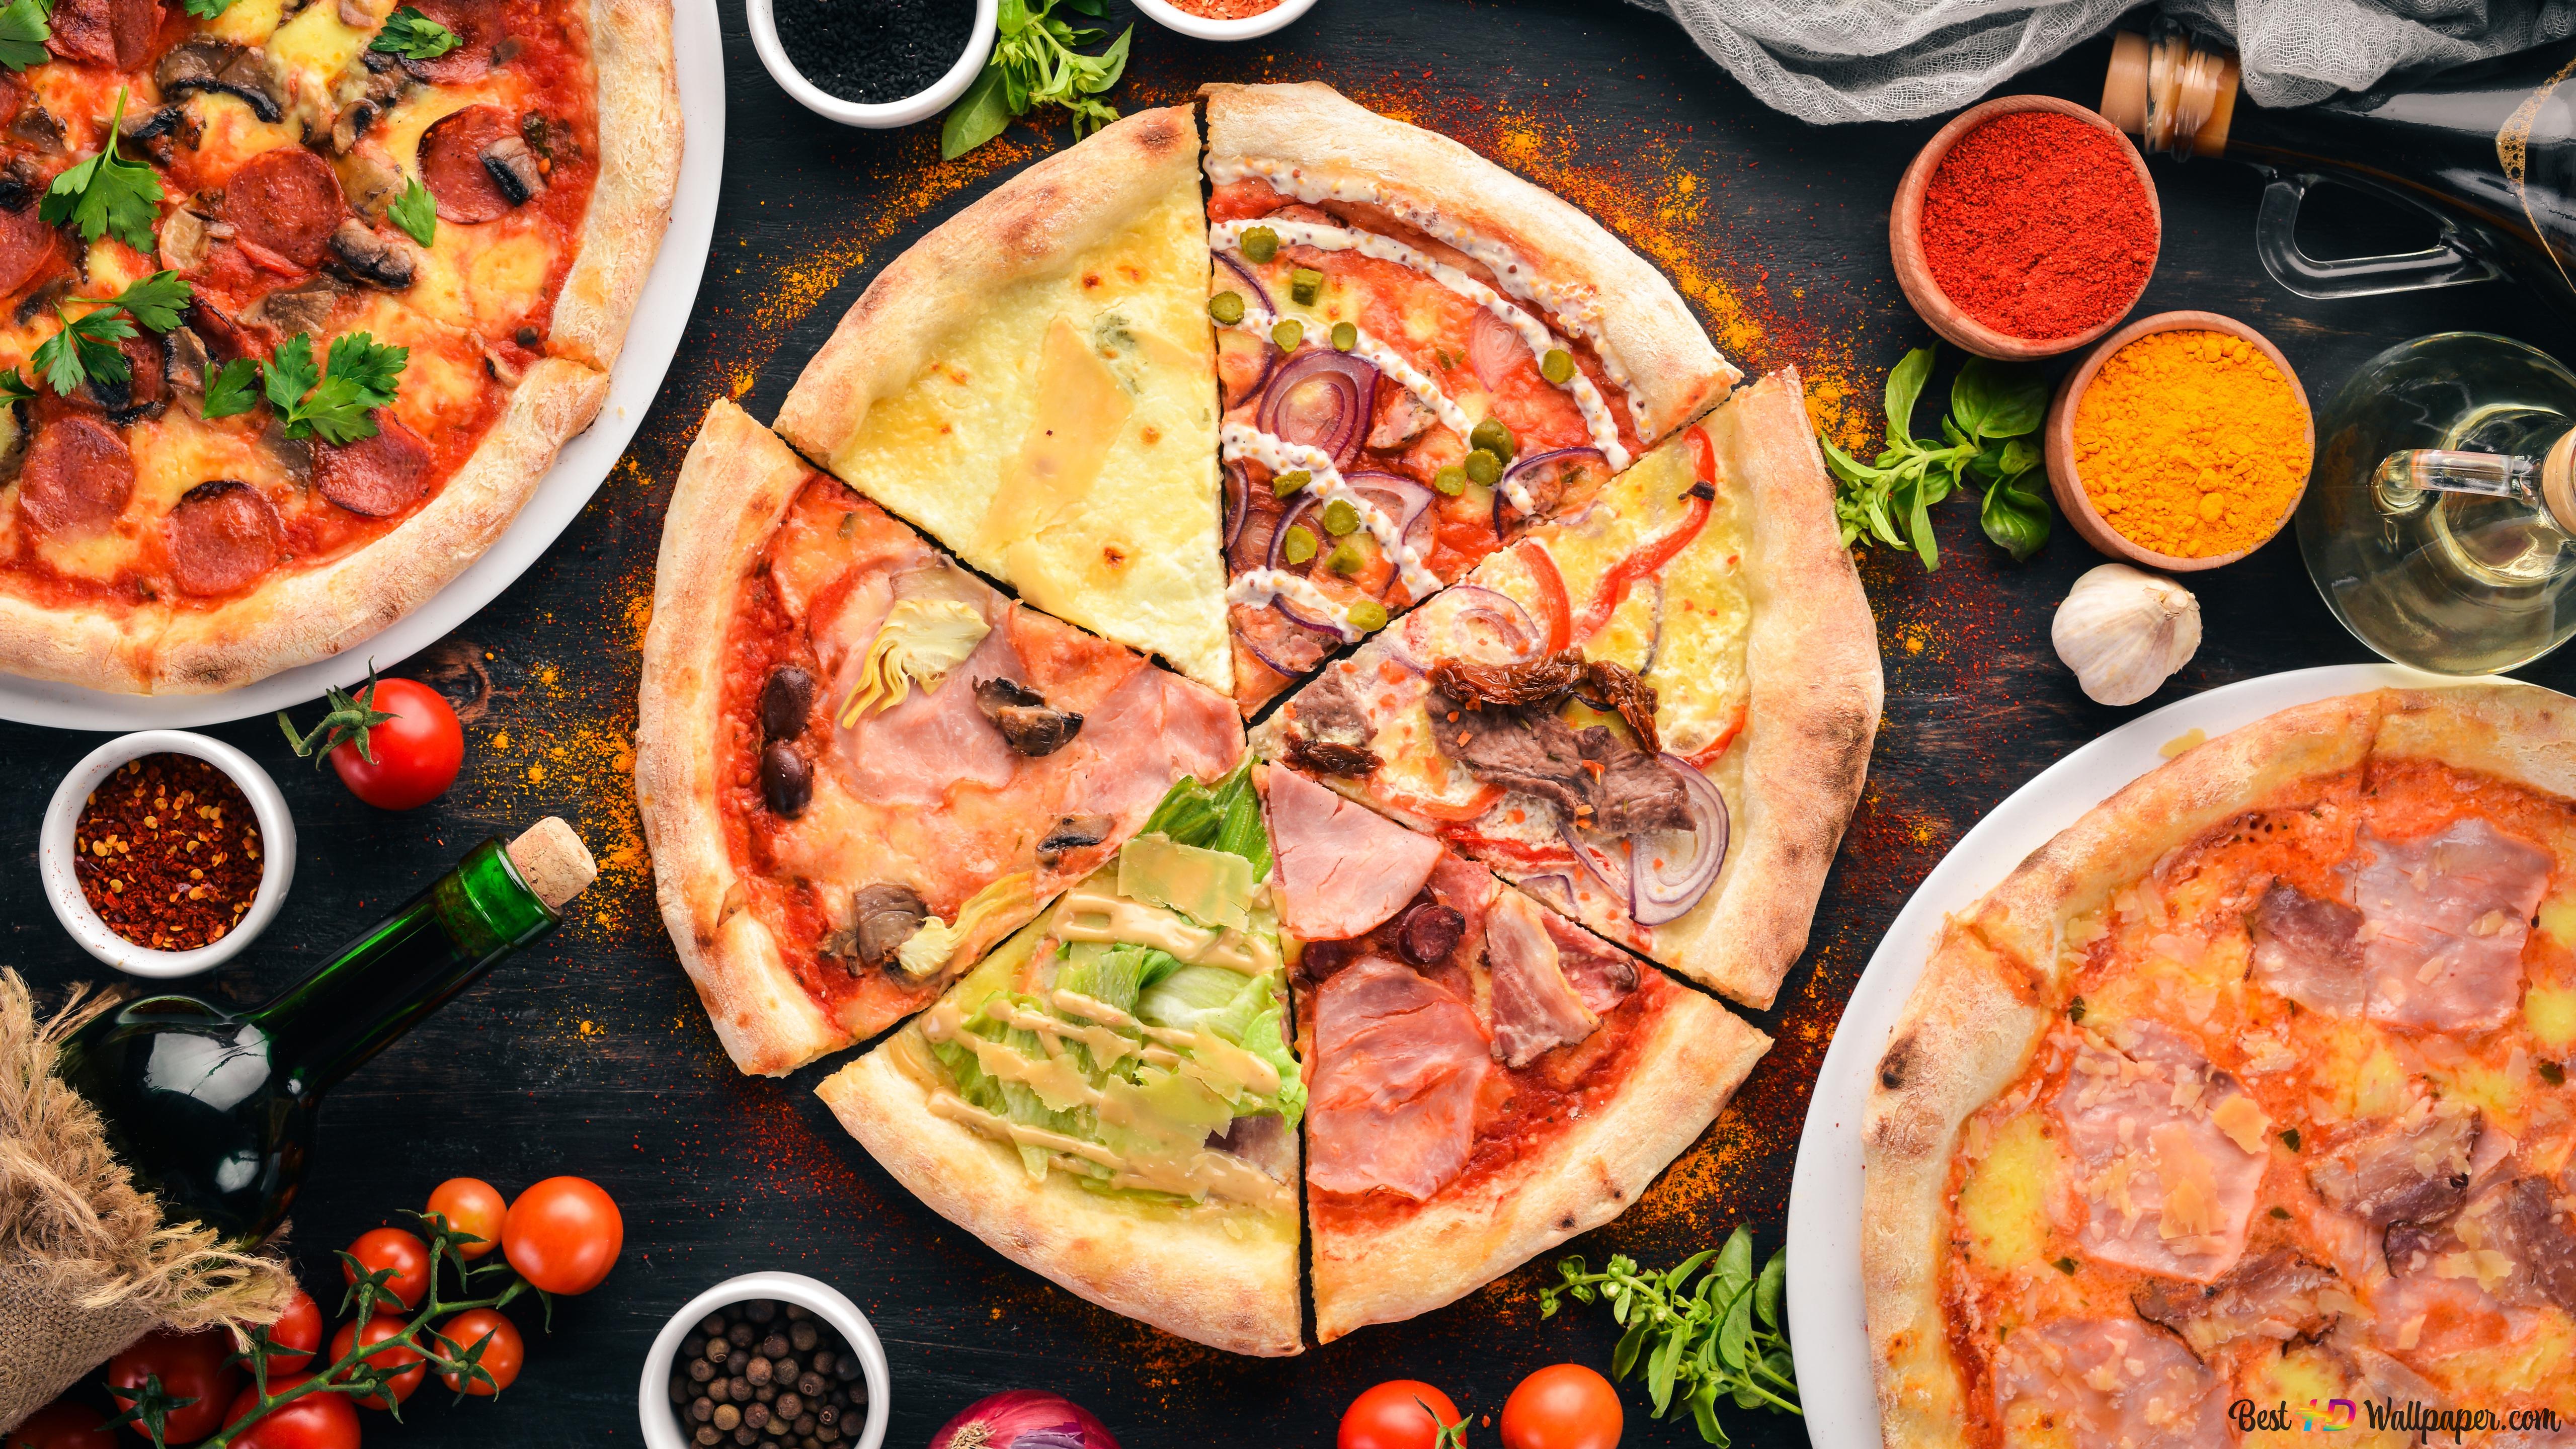 Flavors of Pizza 8K wallpaper download